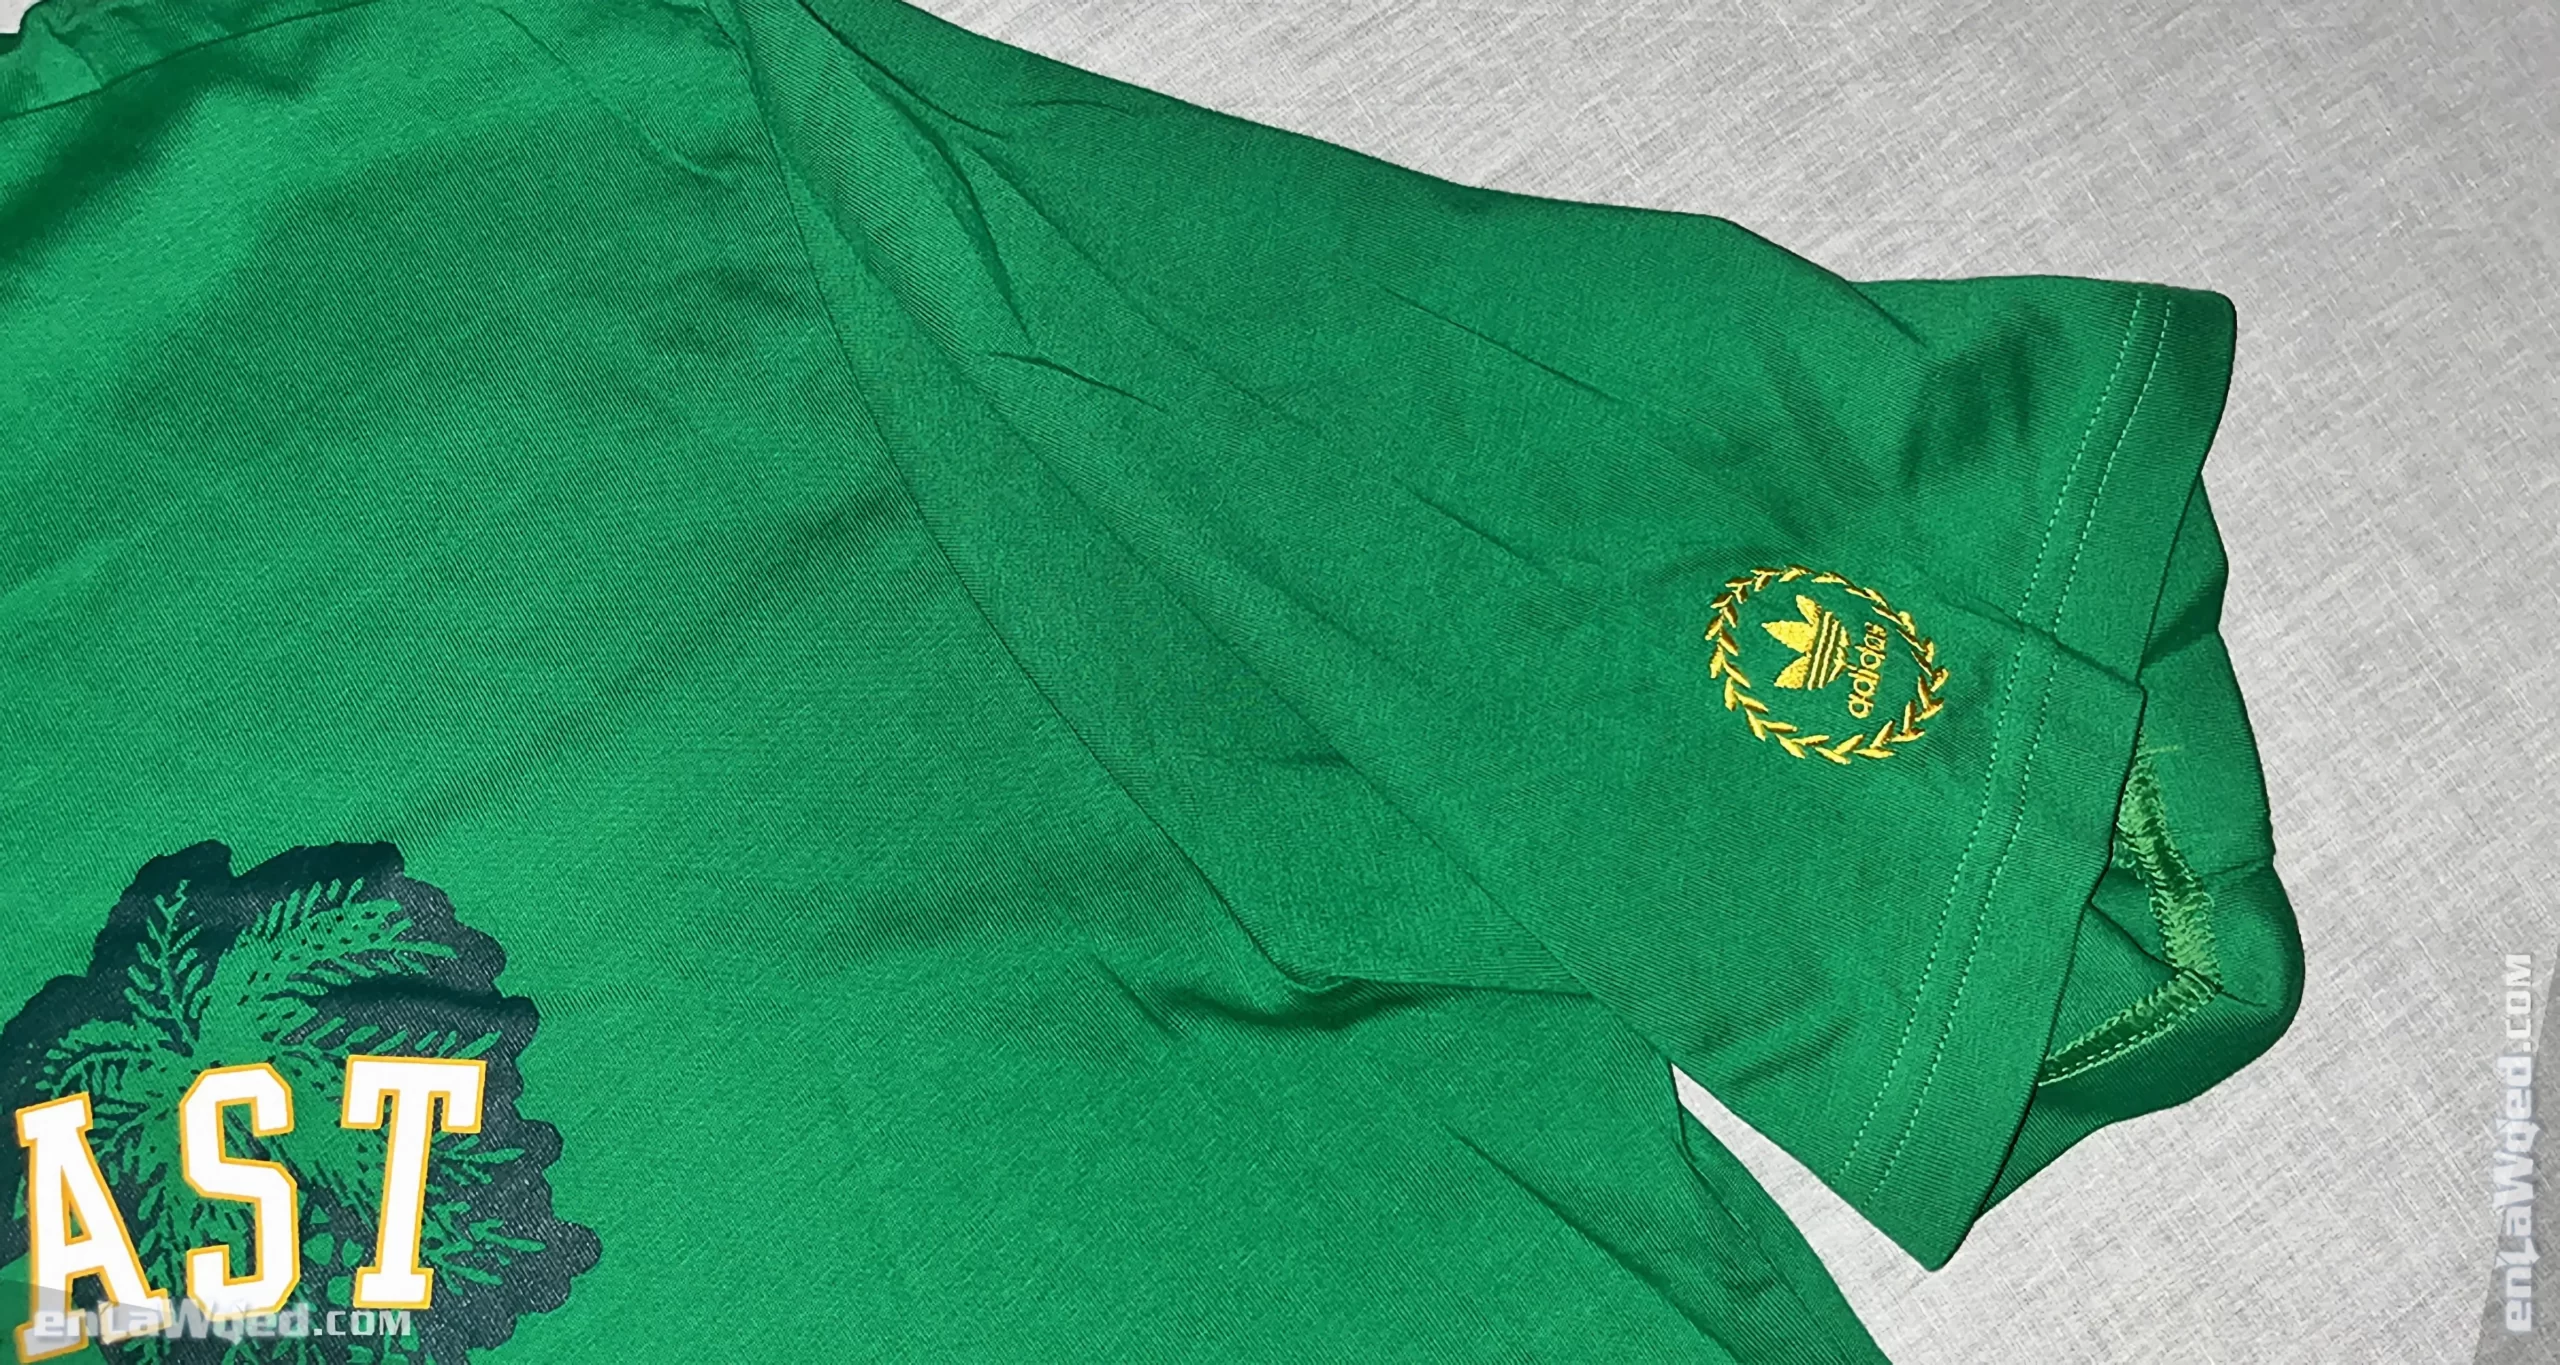 Men’s 2007 Ivory Coast T-Shirt by Adidas Originals: Surefire (EnLawded.com file #lp5sizci127295u5tzwlotzu)